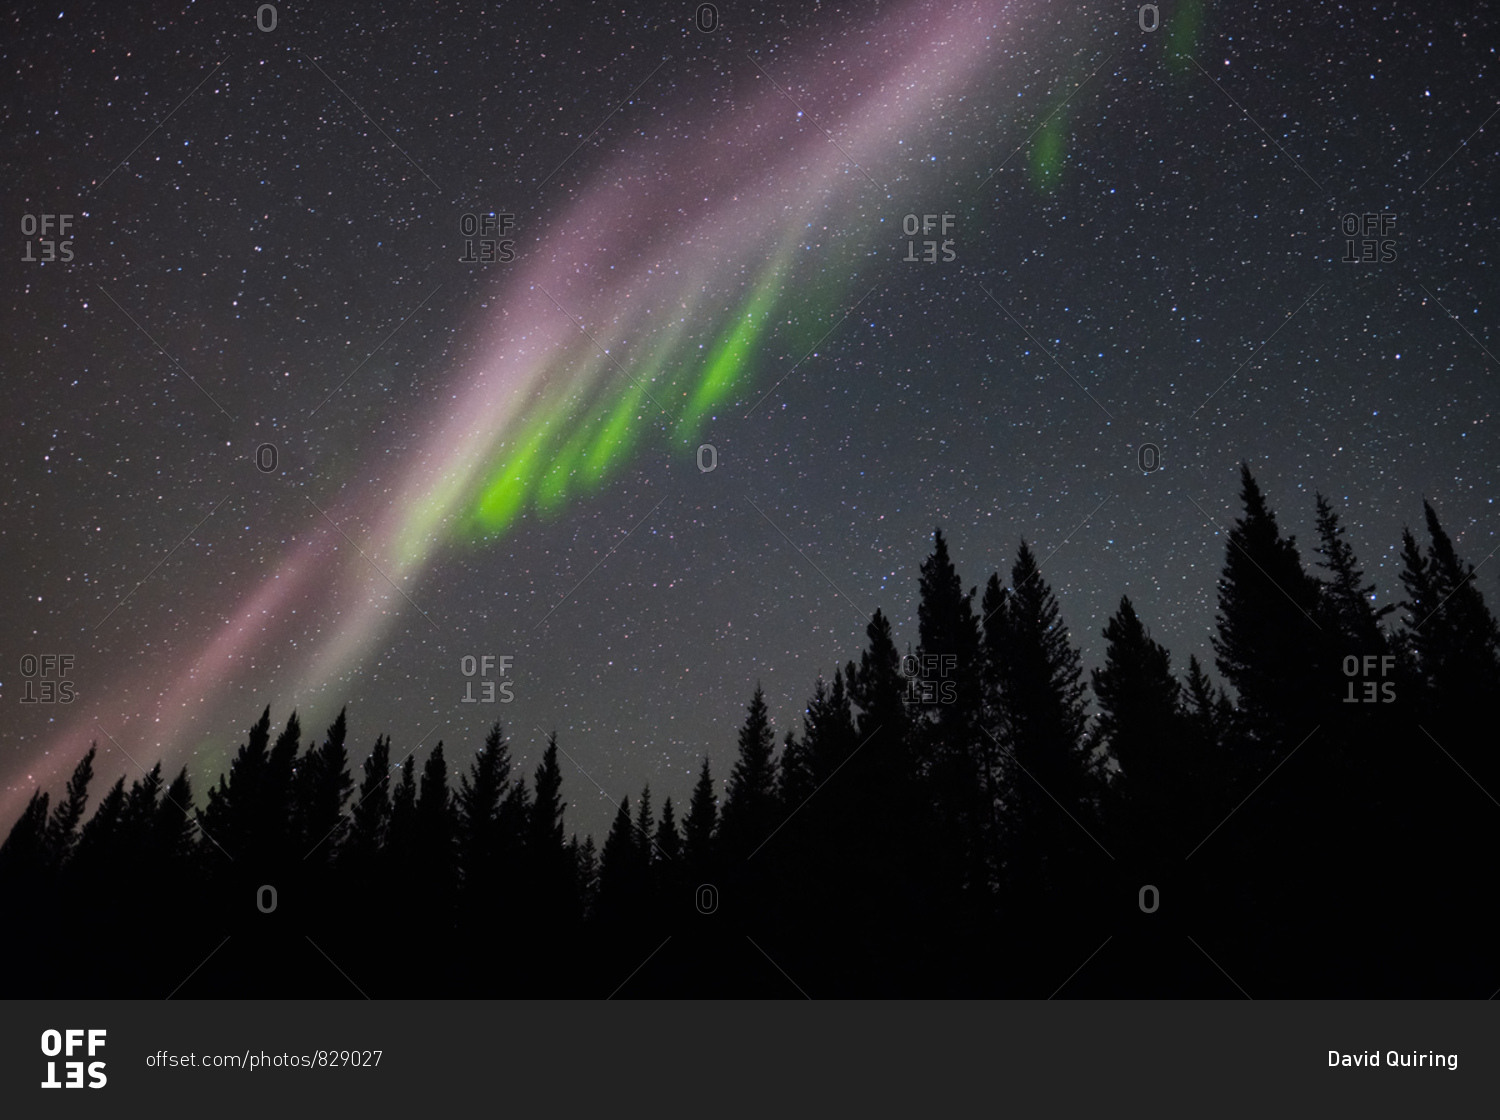 Aurora (Northern Lights) streak across a starlit sky above coniferous trees